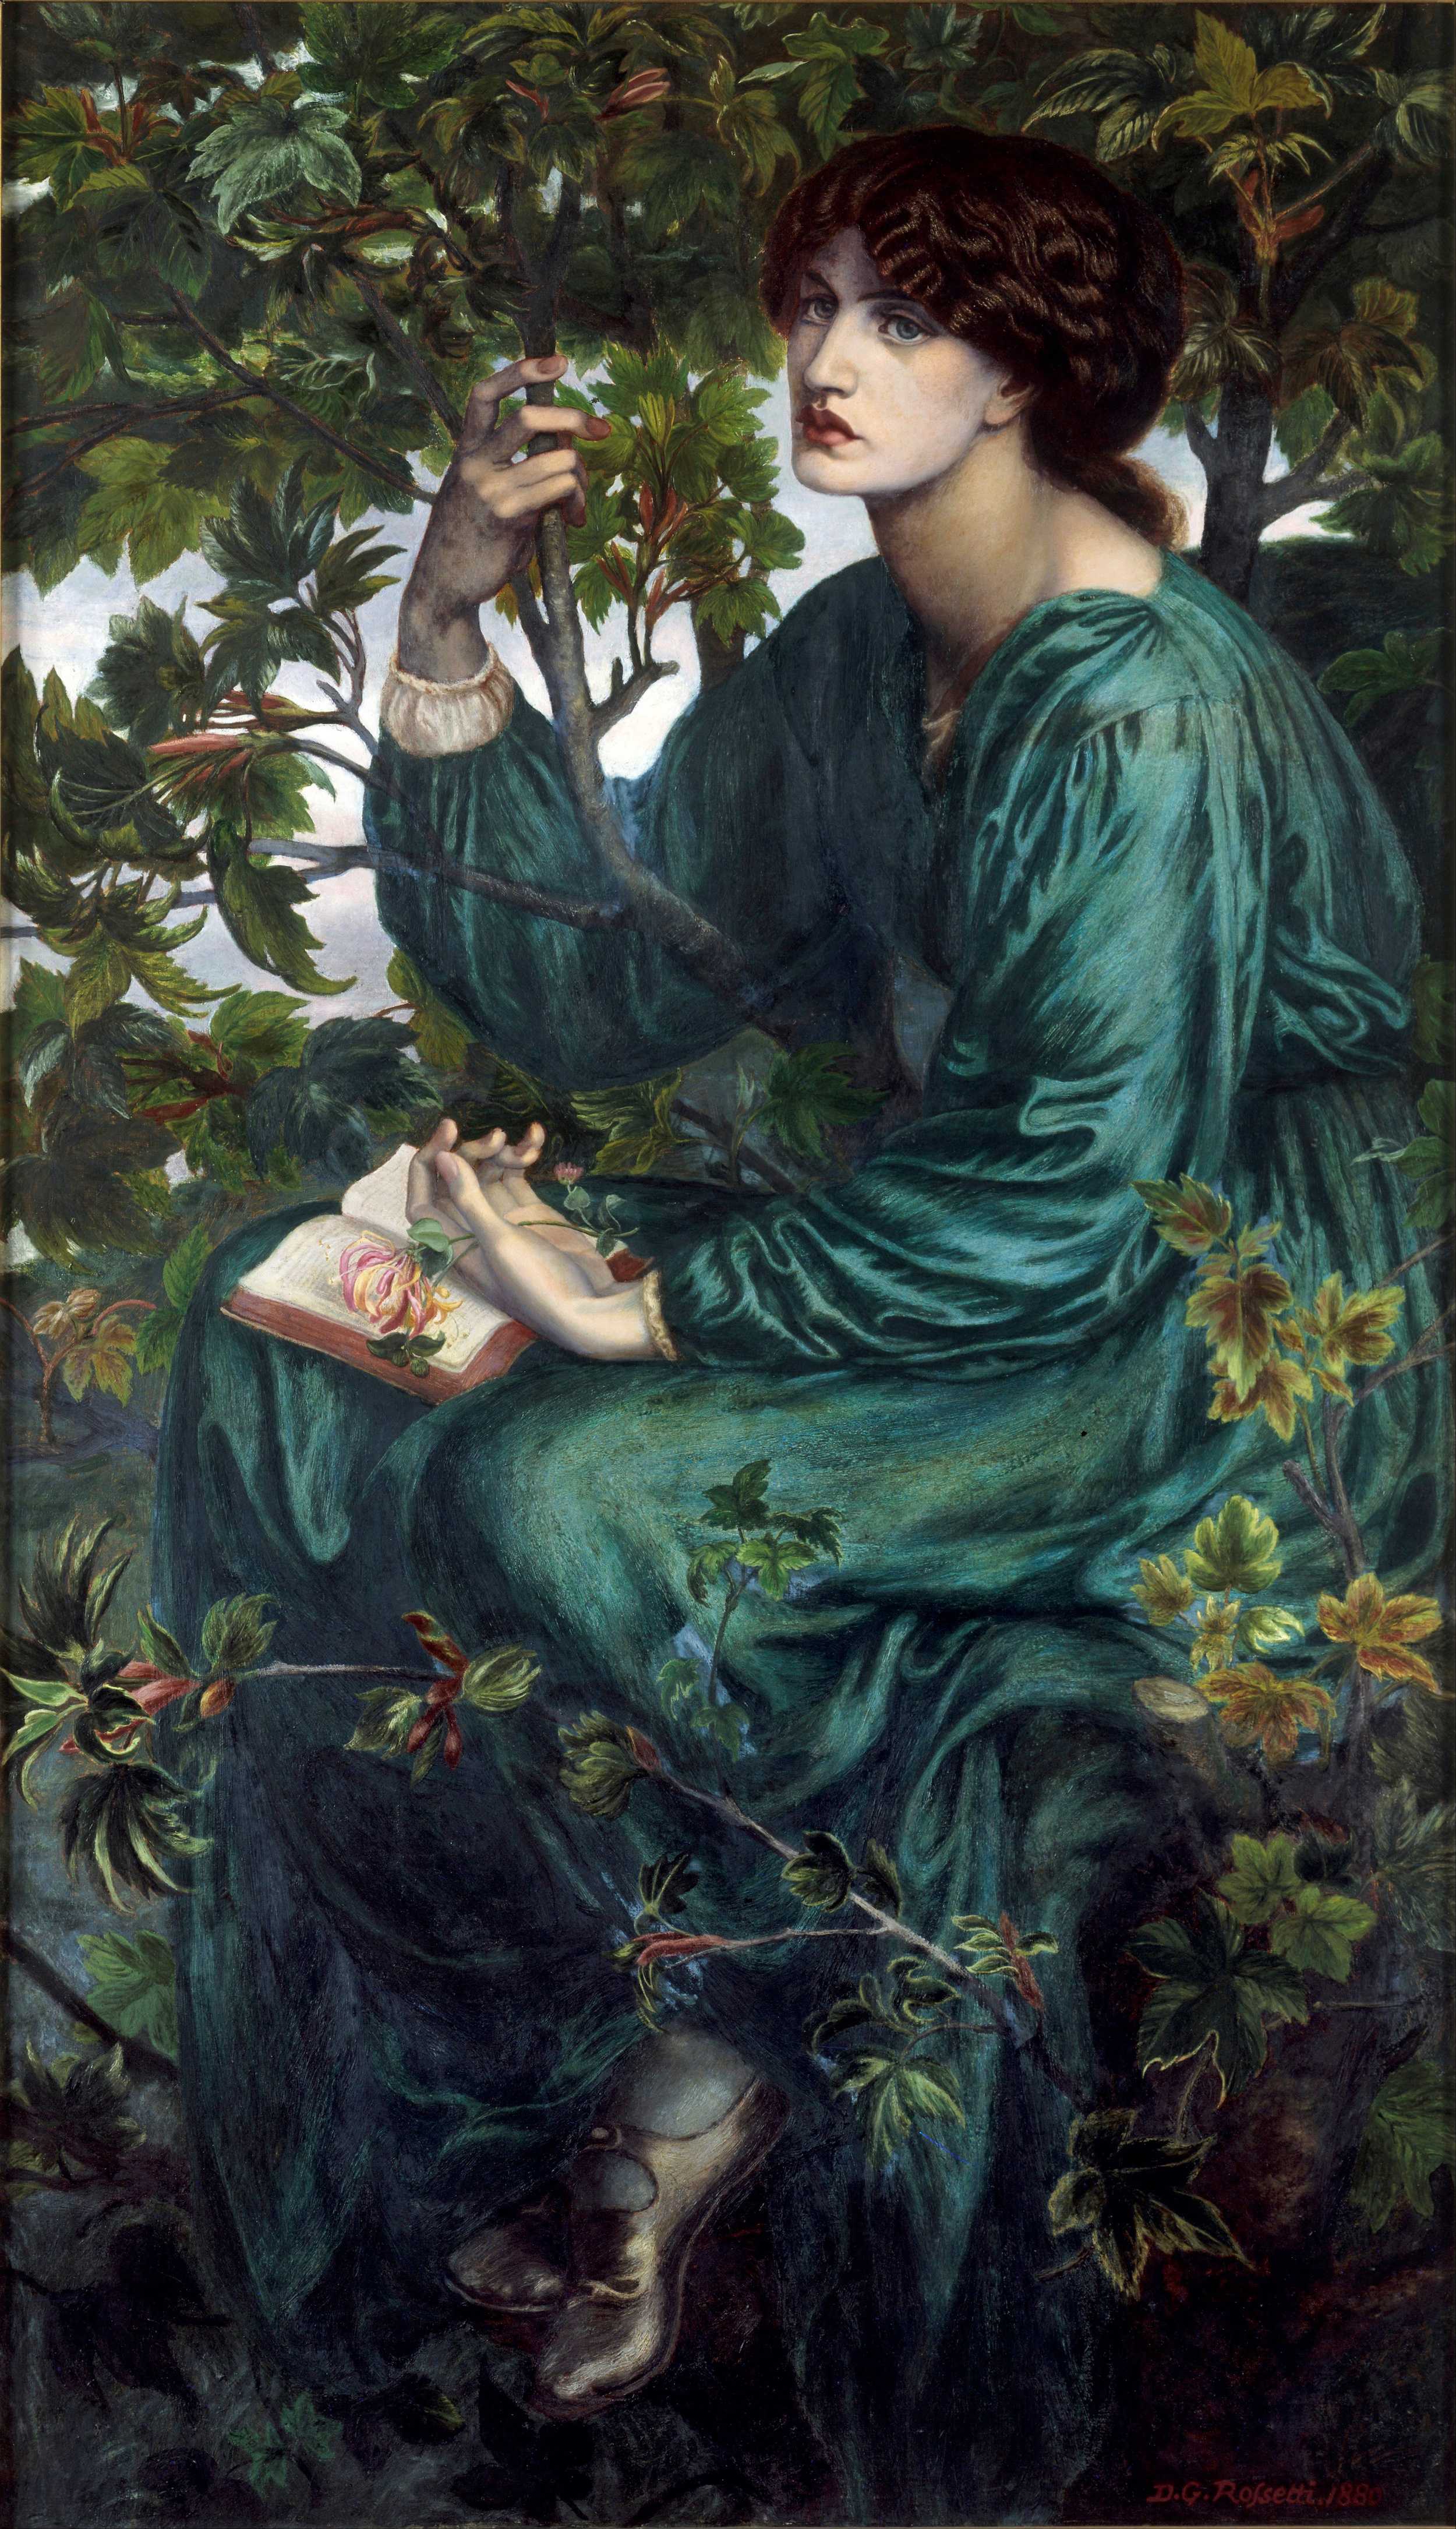 General 2500x4342 artwork painting women Dante Gabriel Rossetti books trees flowers leaves portrait display classic art watermarked